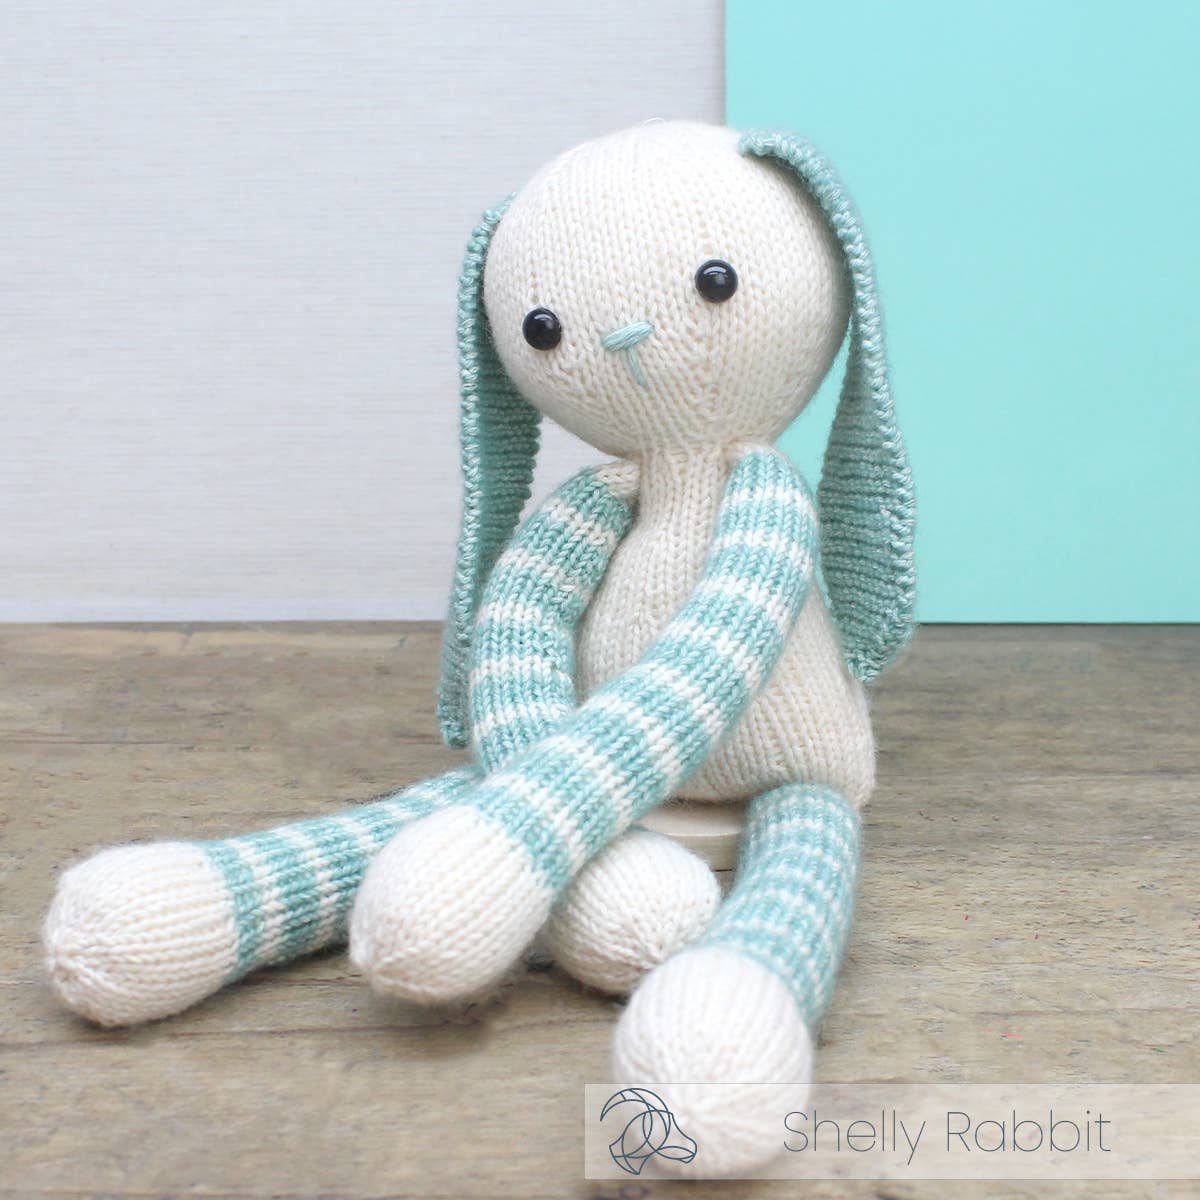 Hardicraft - DIY Knitting Kit - Shelly Rabbit